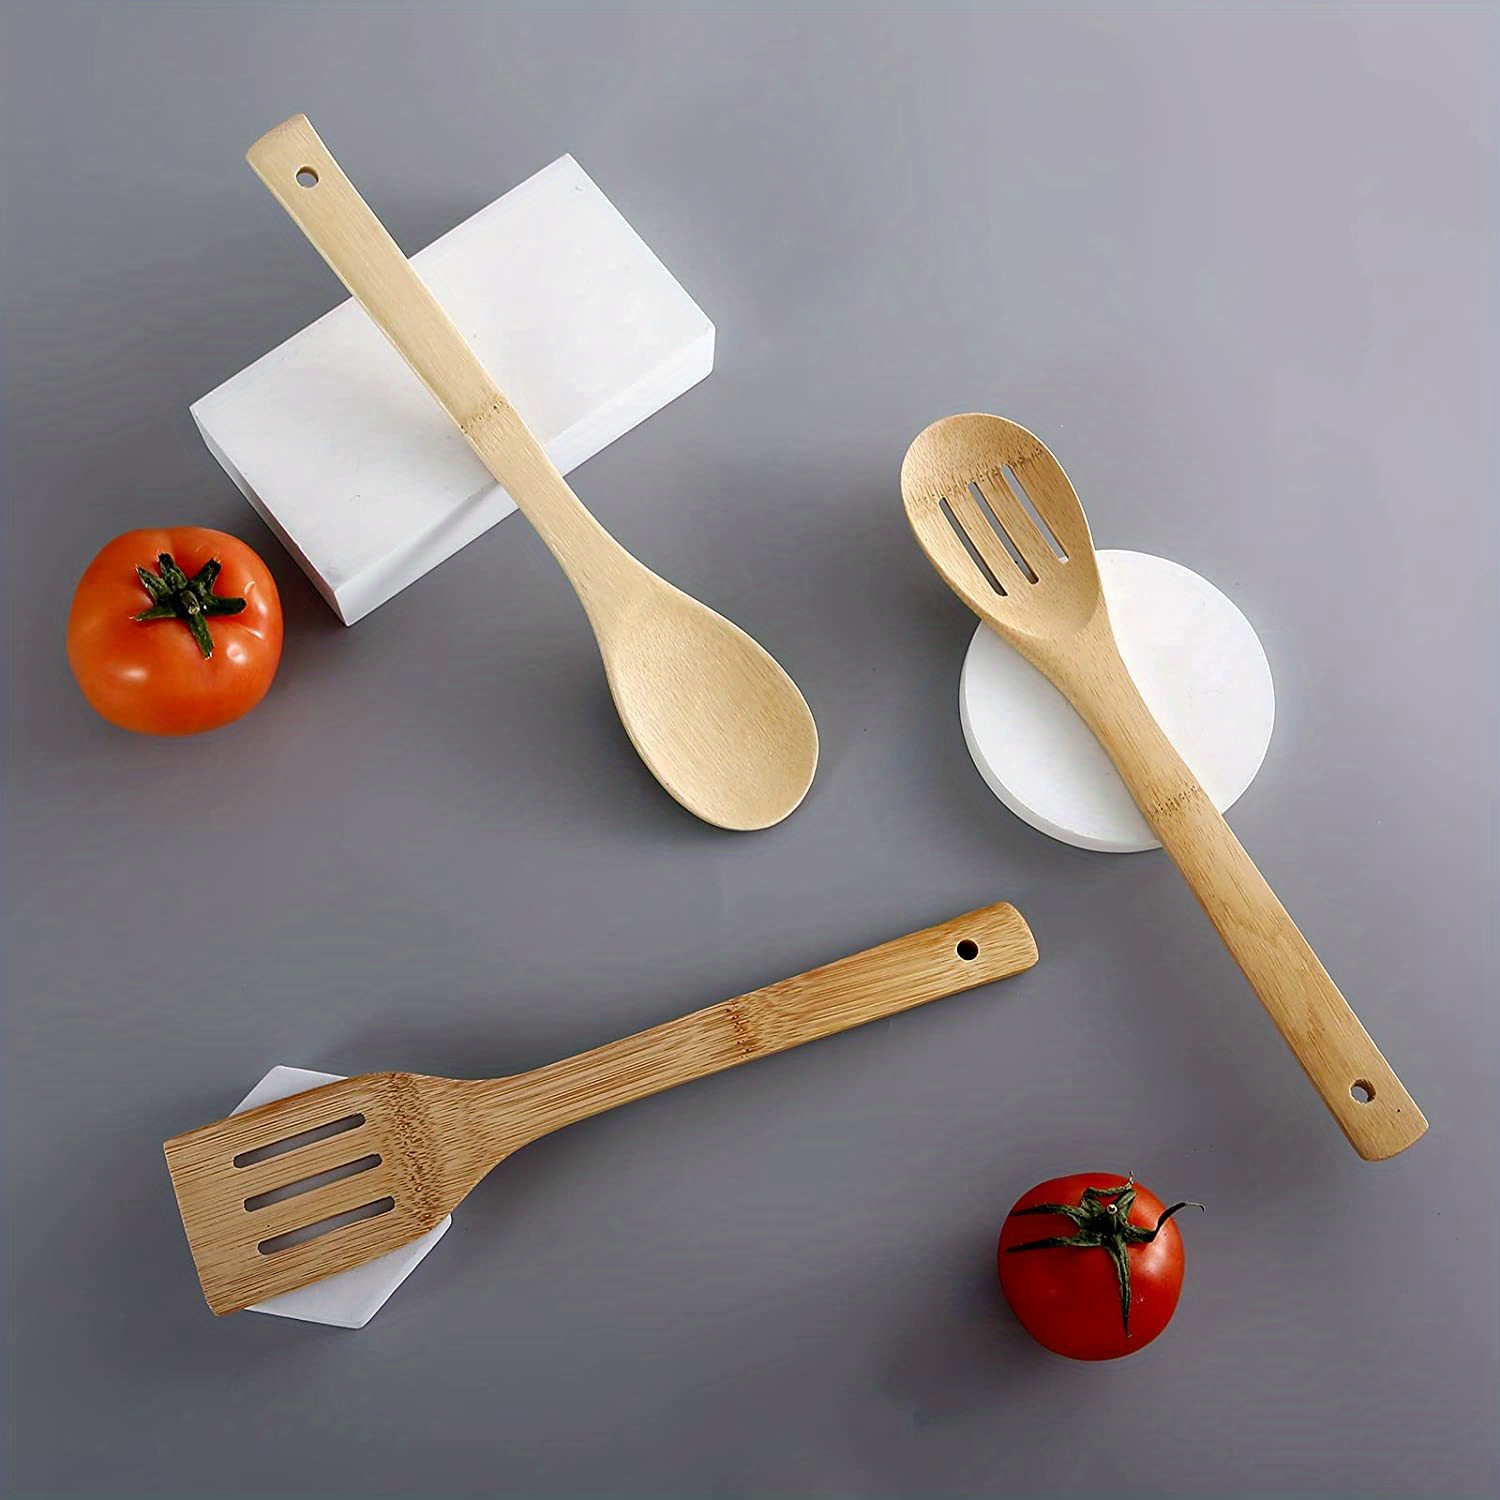 IOOLEEM Cooking wooden Utensil Set (6, Natural Bamboo) spoons, spatula set